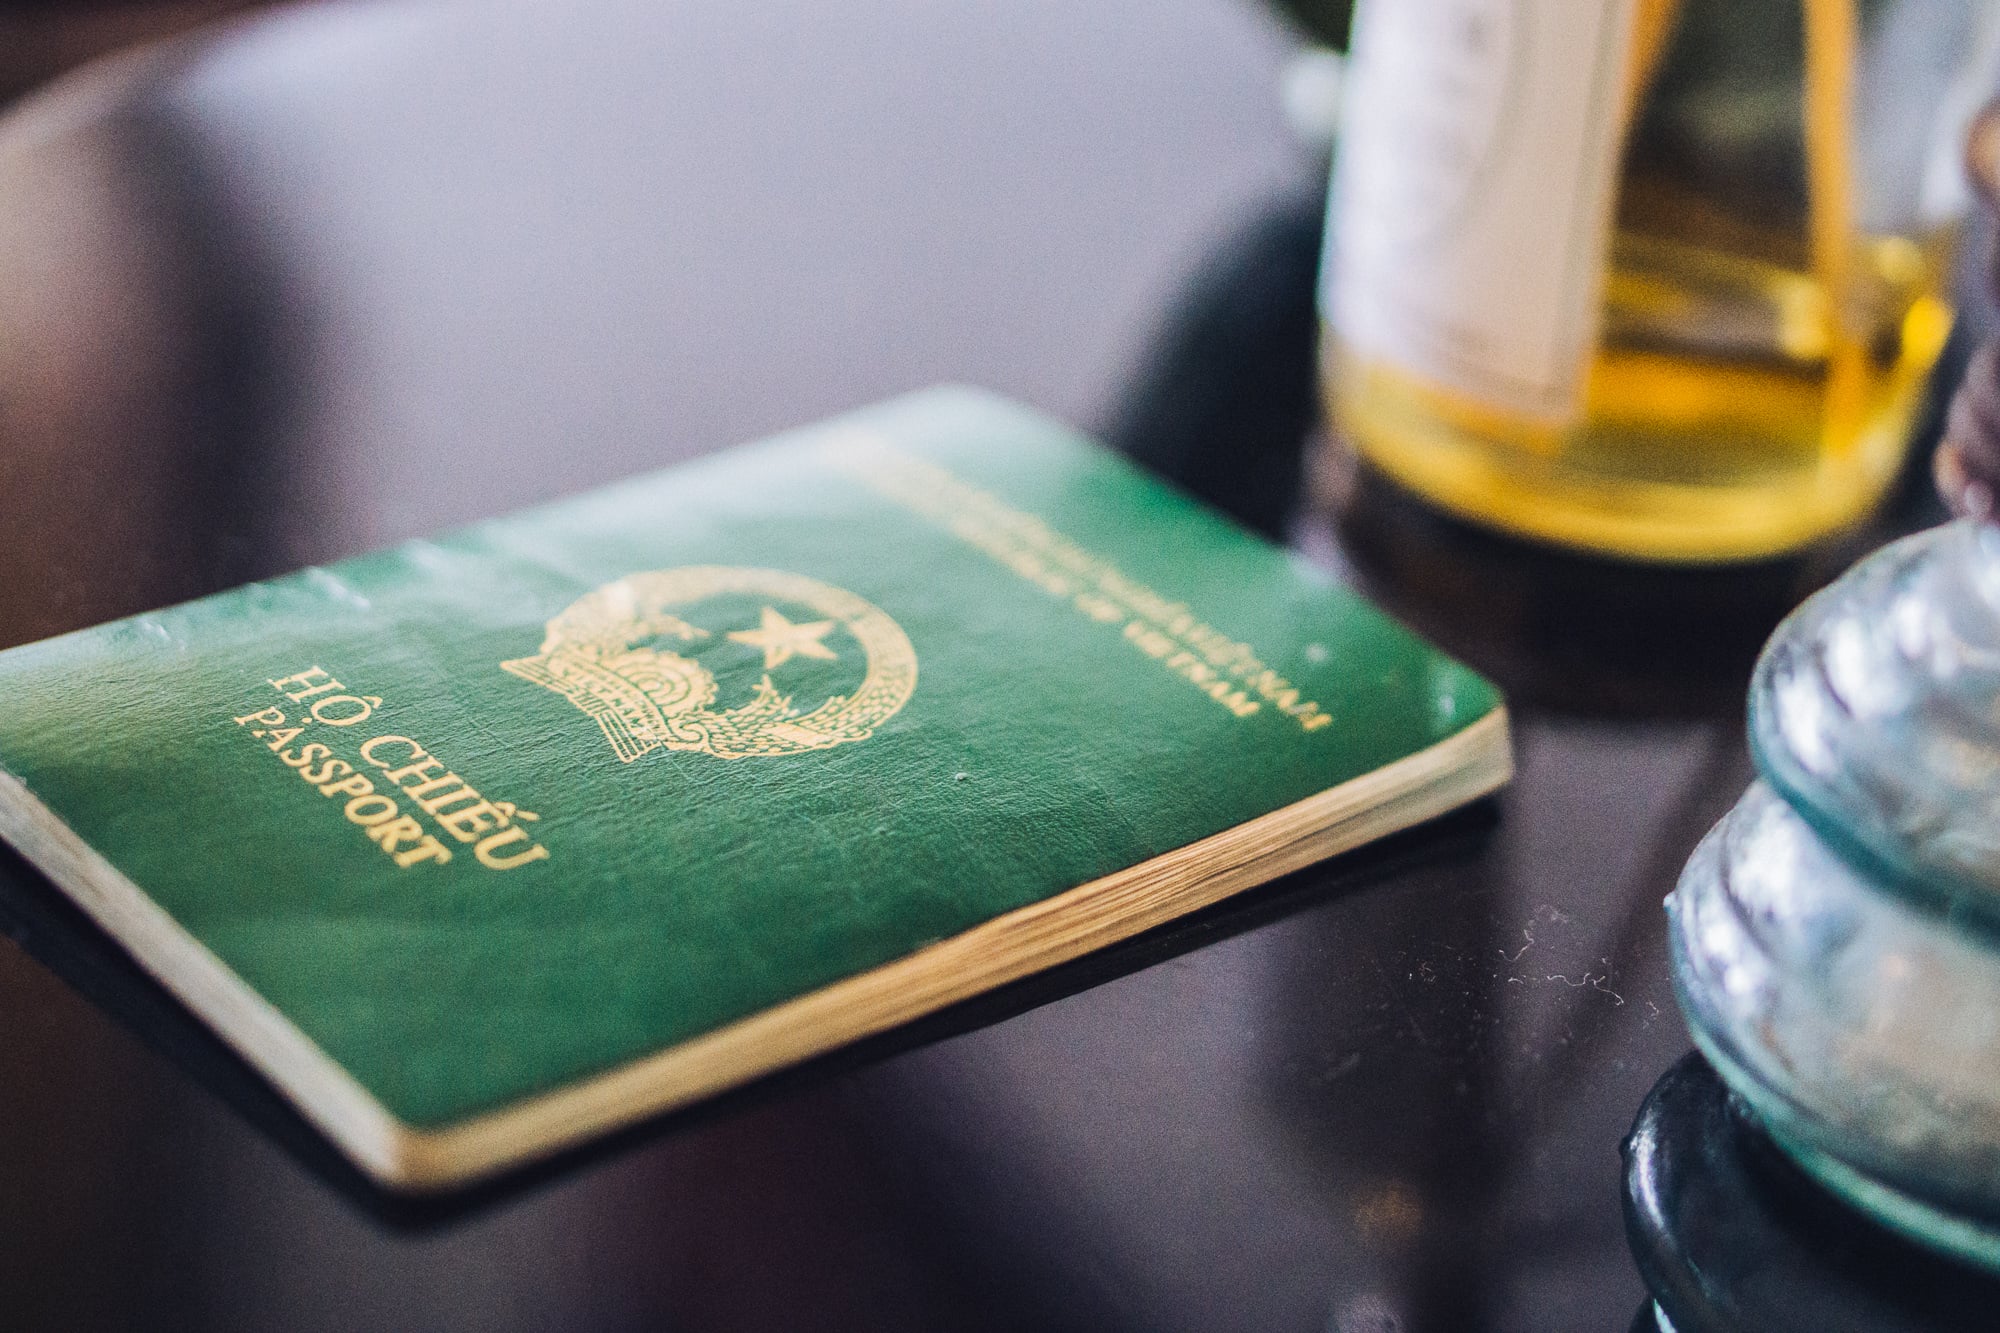 How to make a passport in Vietnam